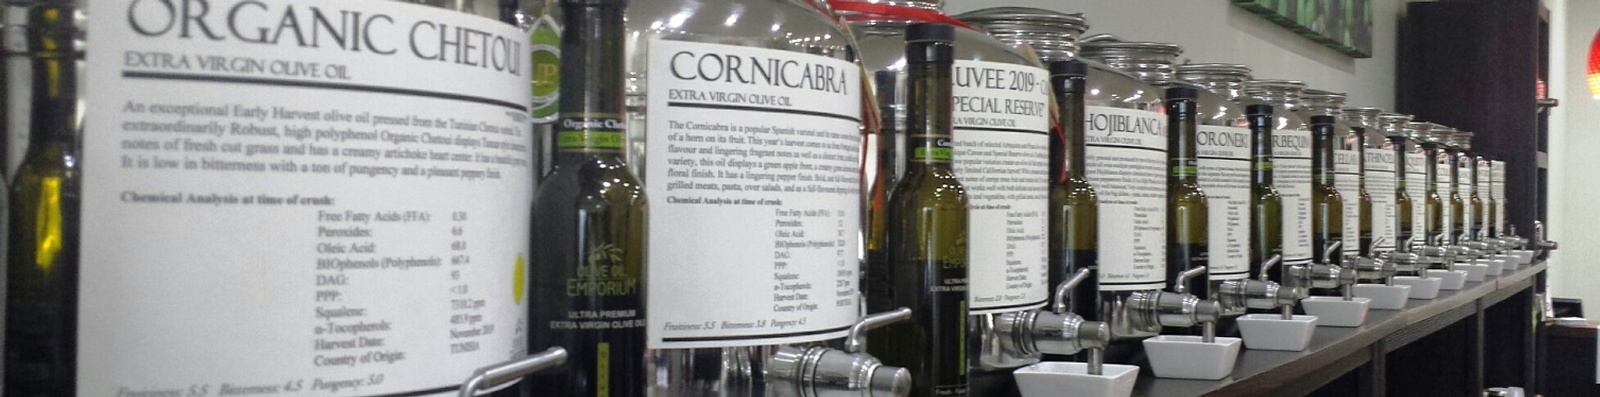 Fresh Extra Virgin Olive Oils on Tap - Olive Oil Emporium - Toronto